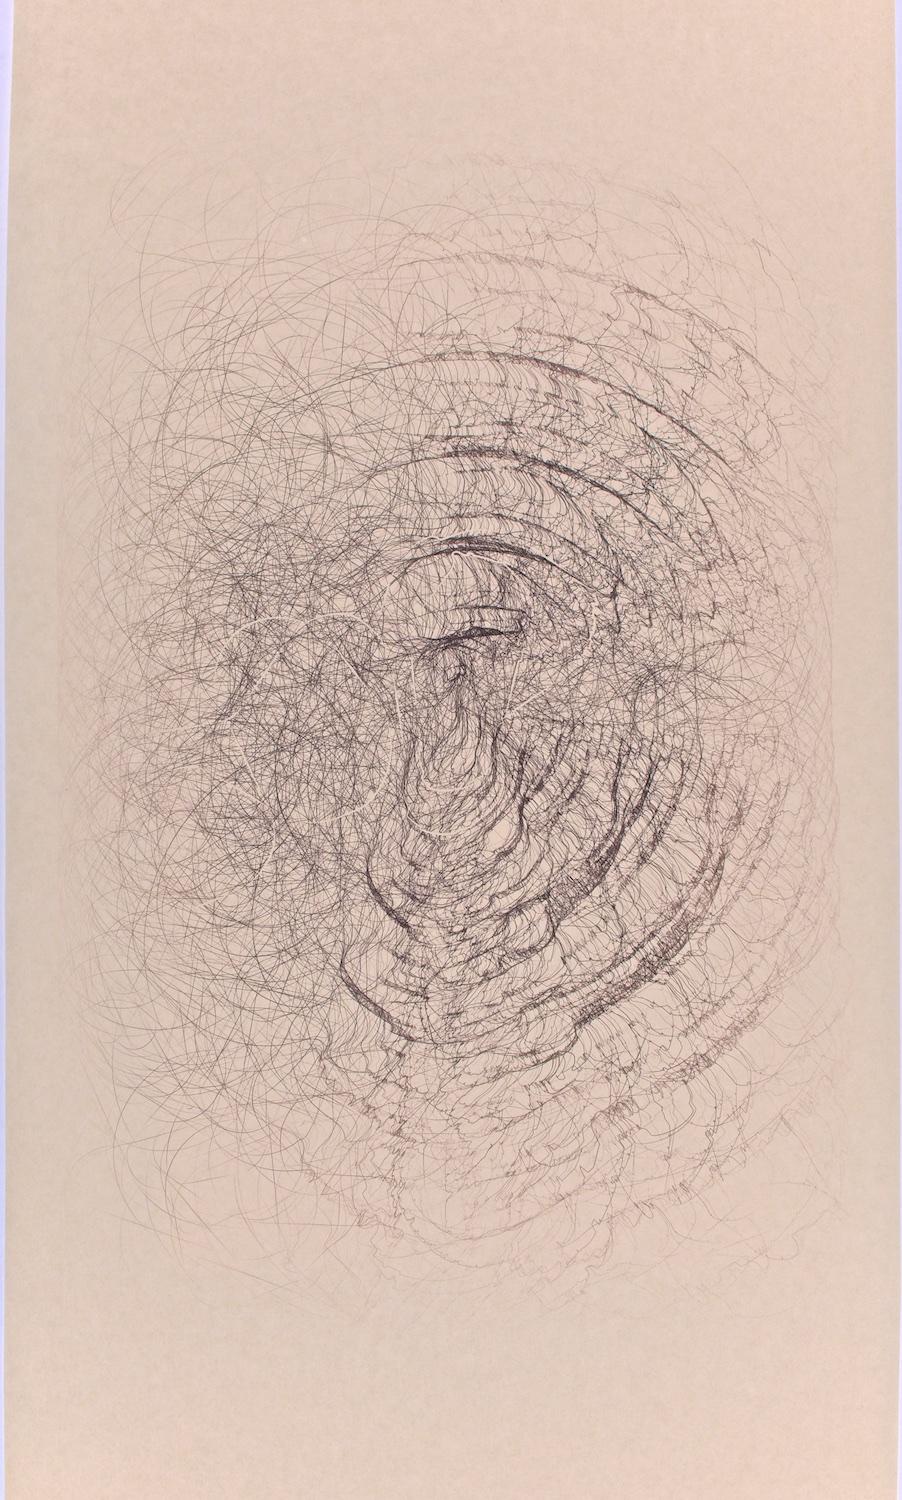   H4&nbsp;    Digital drawing, inkjet pigments, 2012-2014    Art : 24.25”x15.25”&nbsp;    Paper: 35”x17” Niyodo natural     